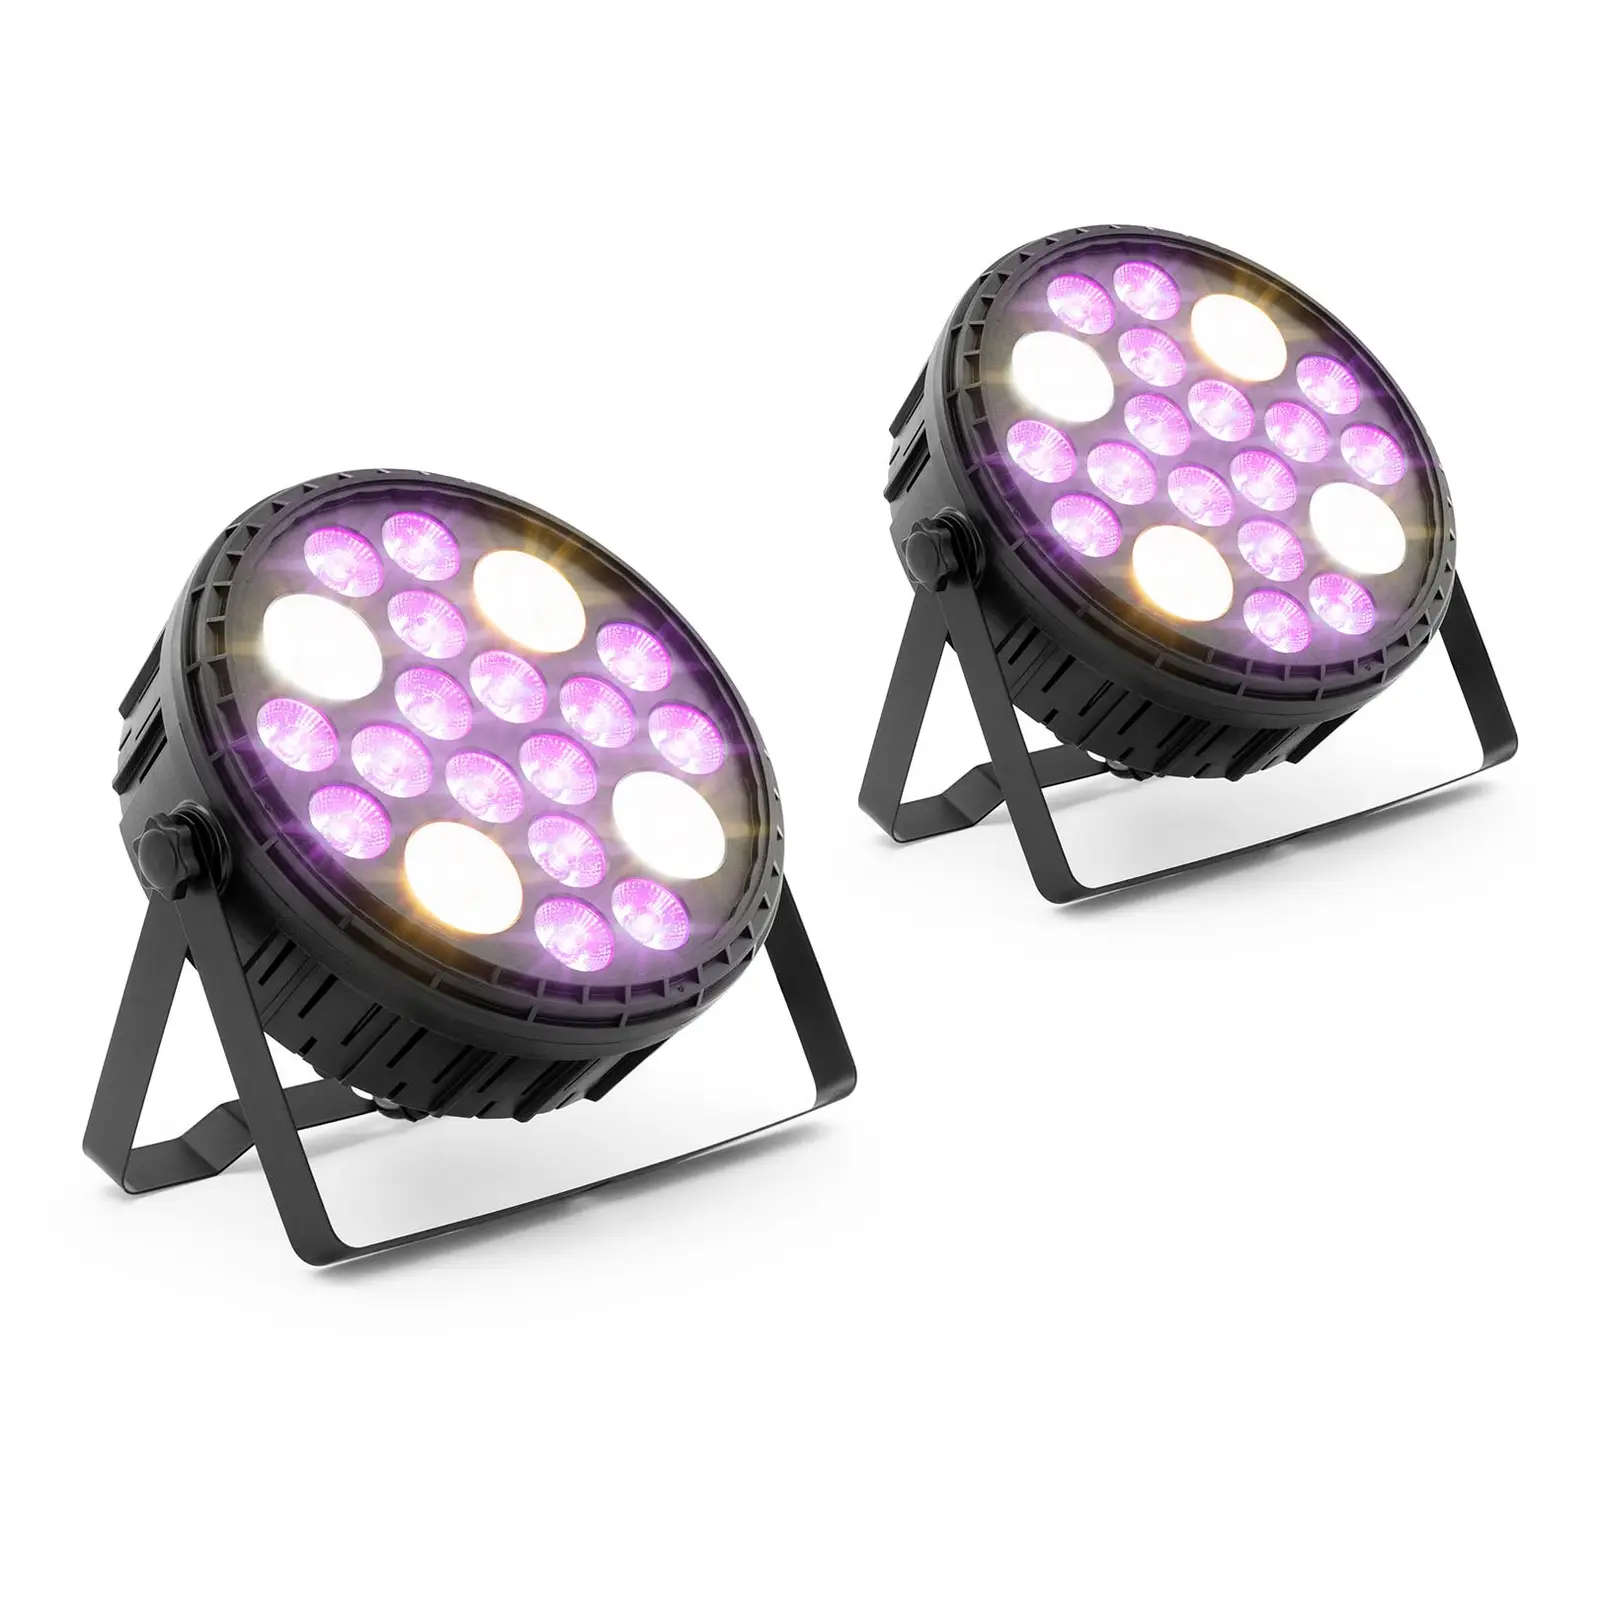 Faretto PAR LED - 16 LED - 120 W - RGBW - 2 pezzi